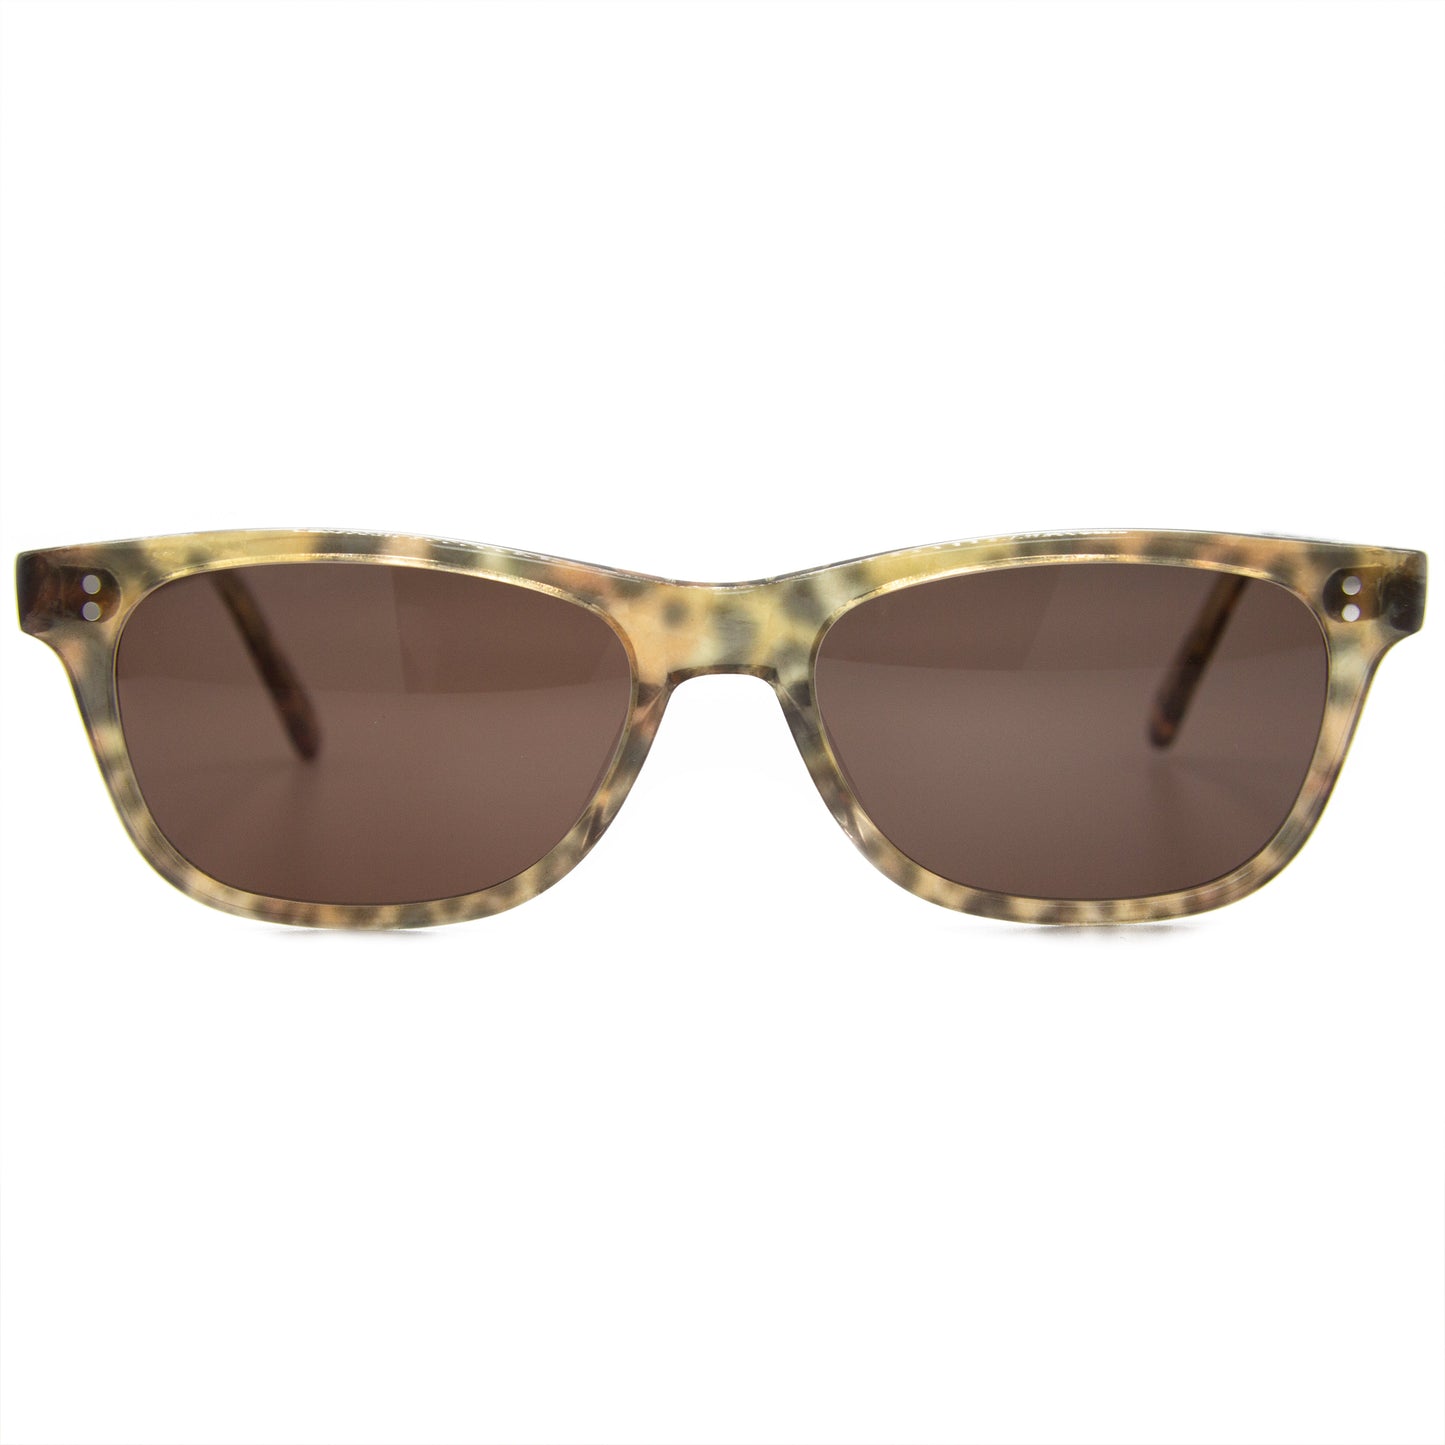 3 brothers - Mish - Leopard - Prescription Sunglasses